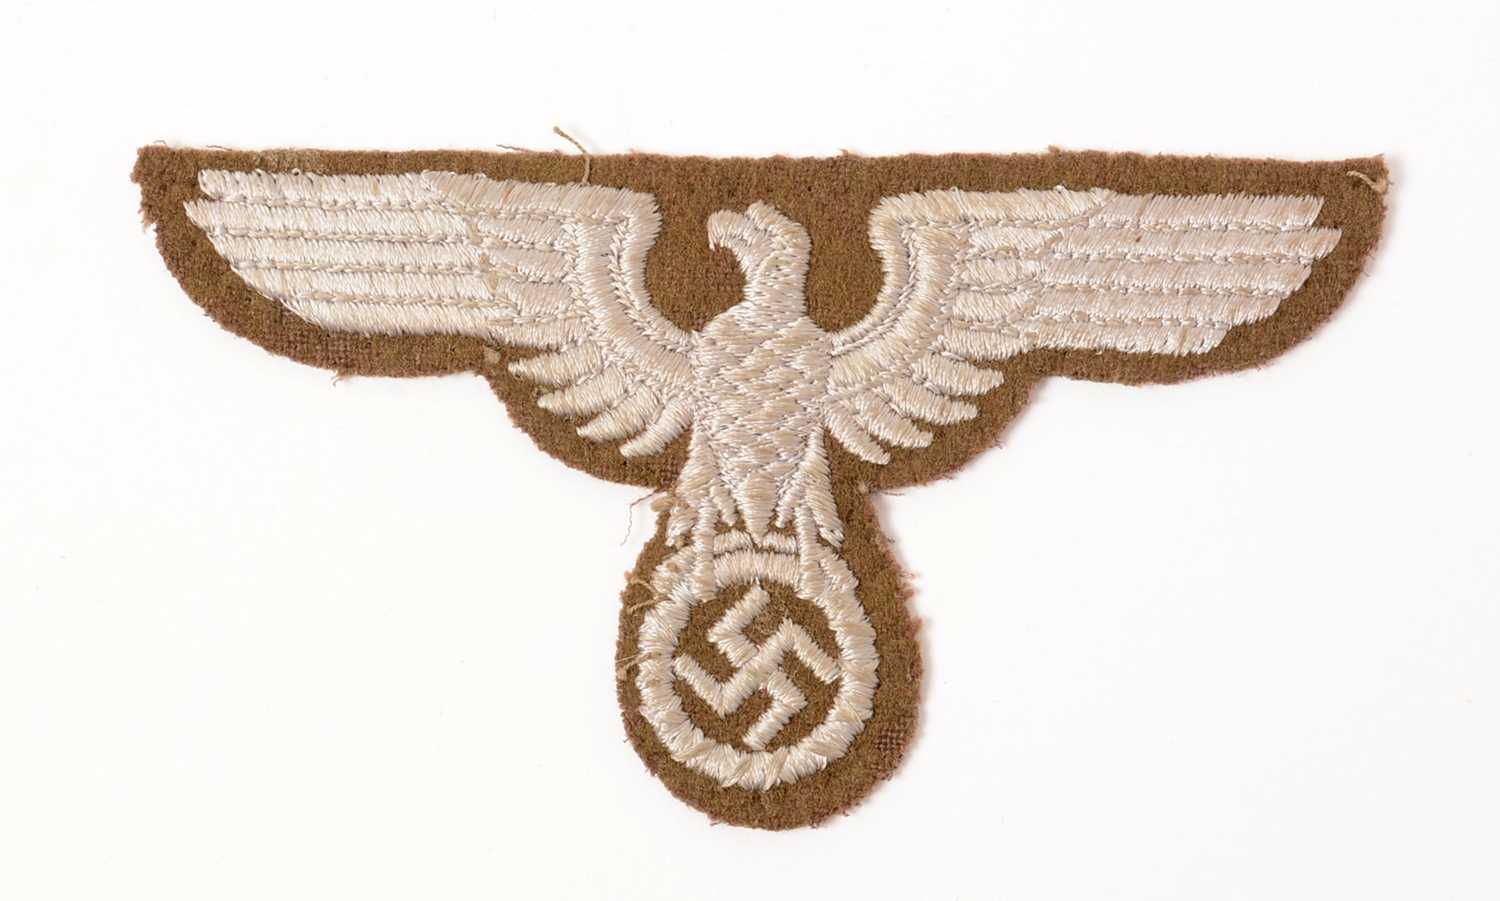 Lot 1180 - WWII German Eastern People's sleeve eagle